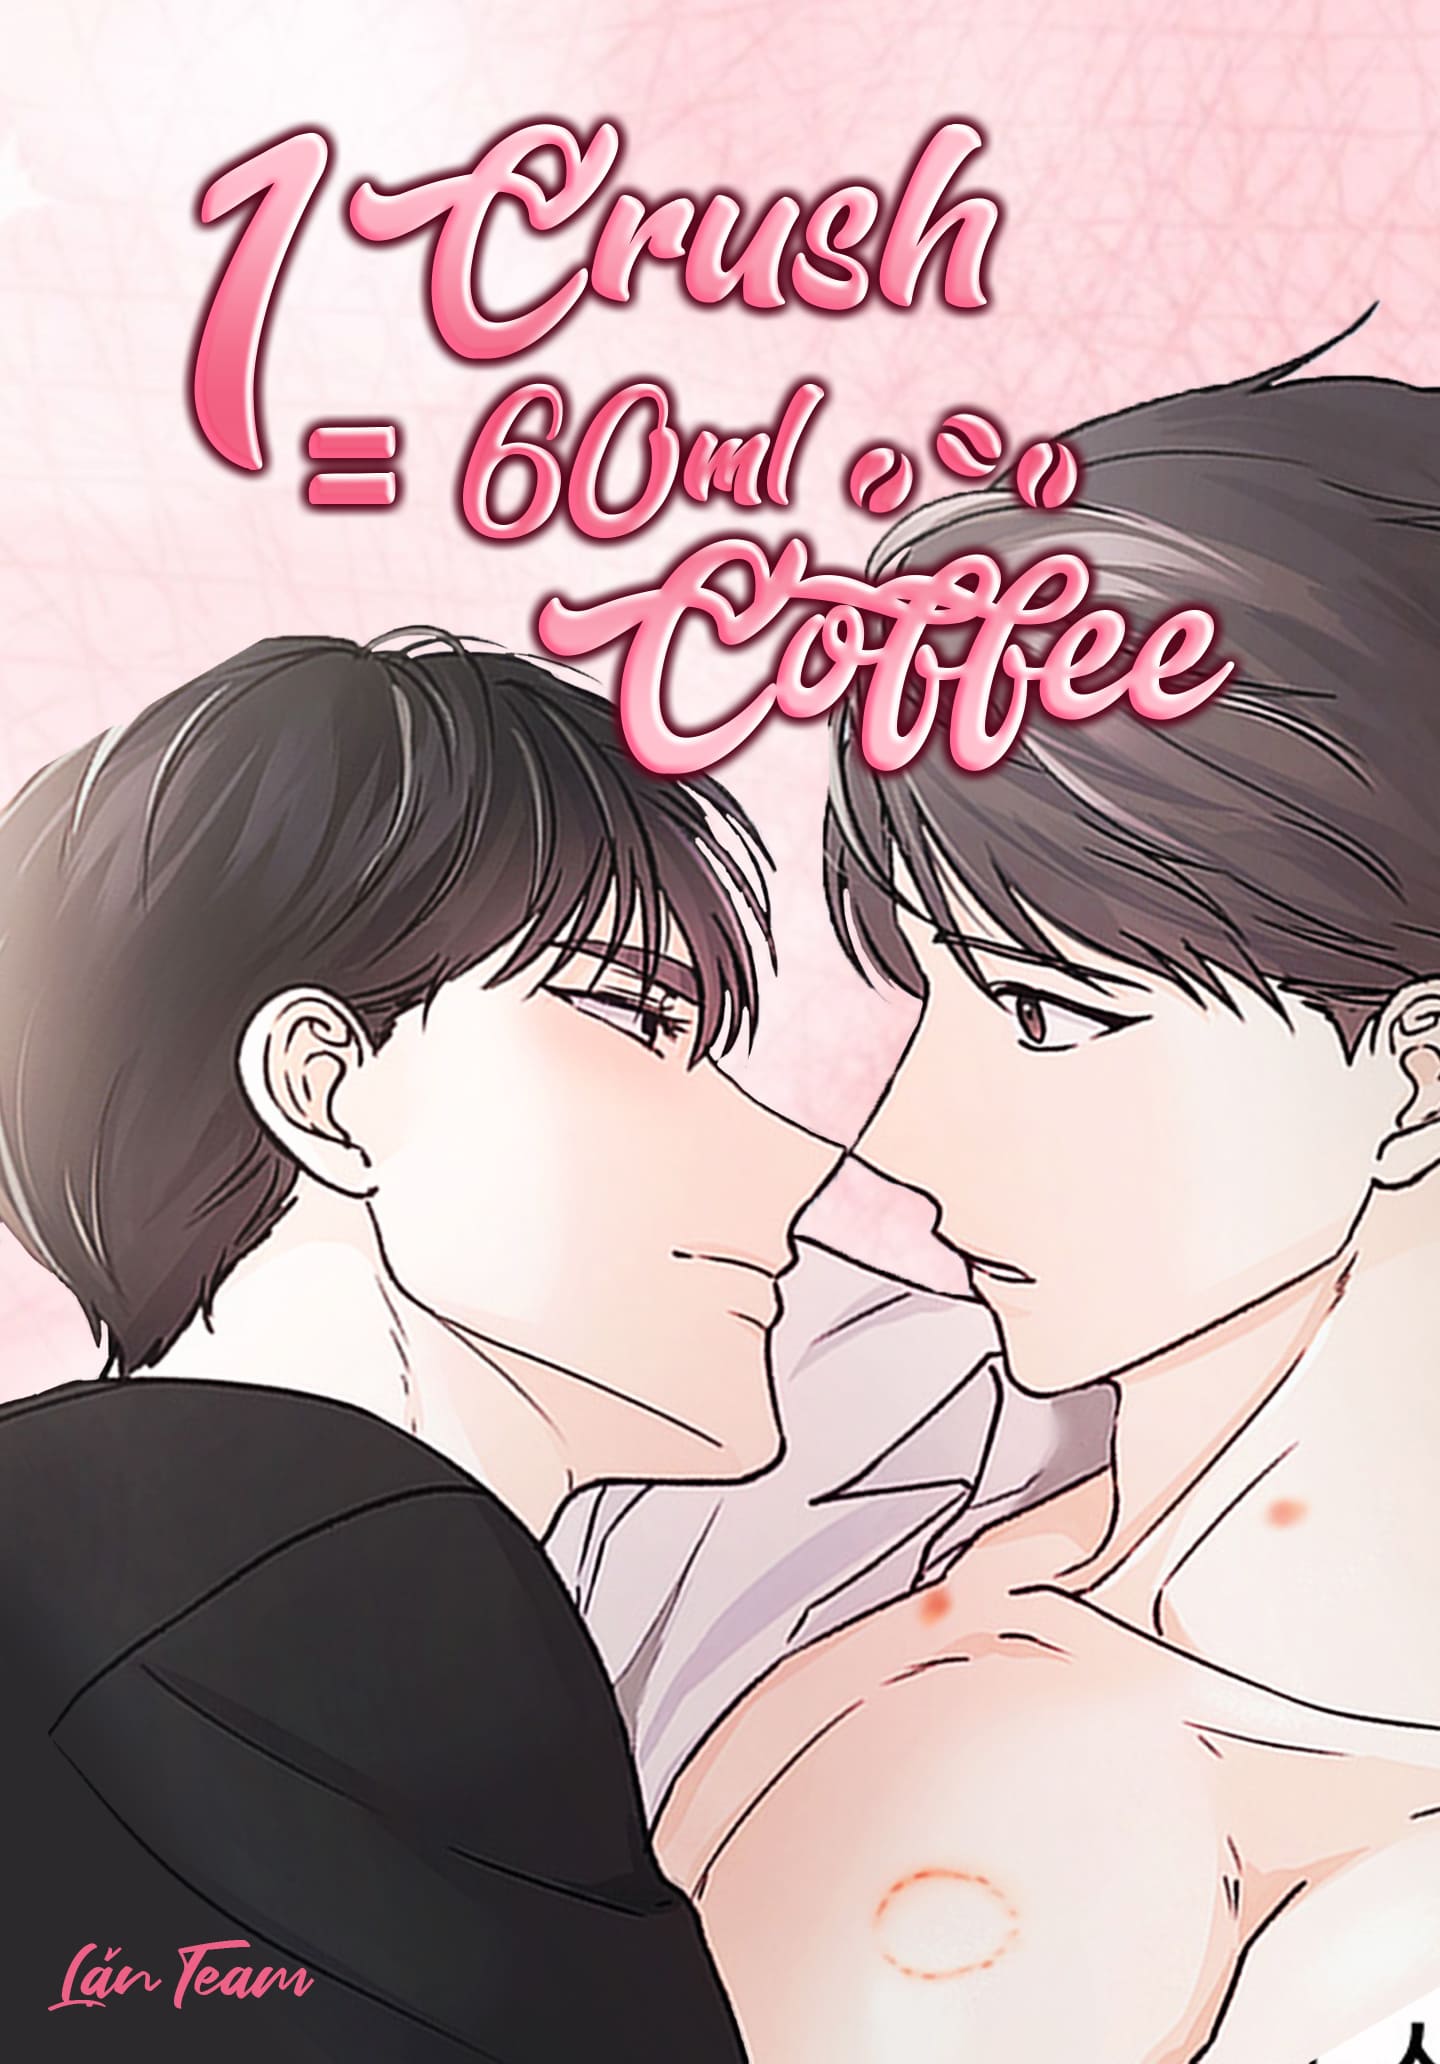 1-crush-60ml-coffee